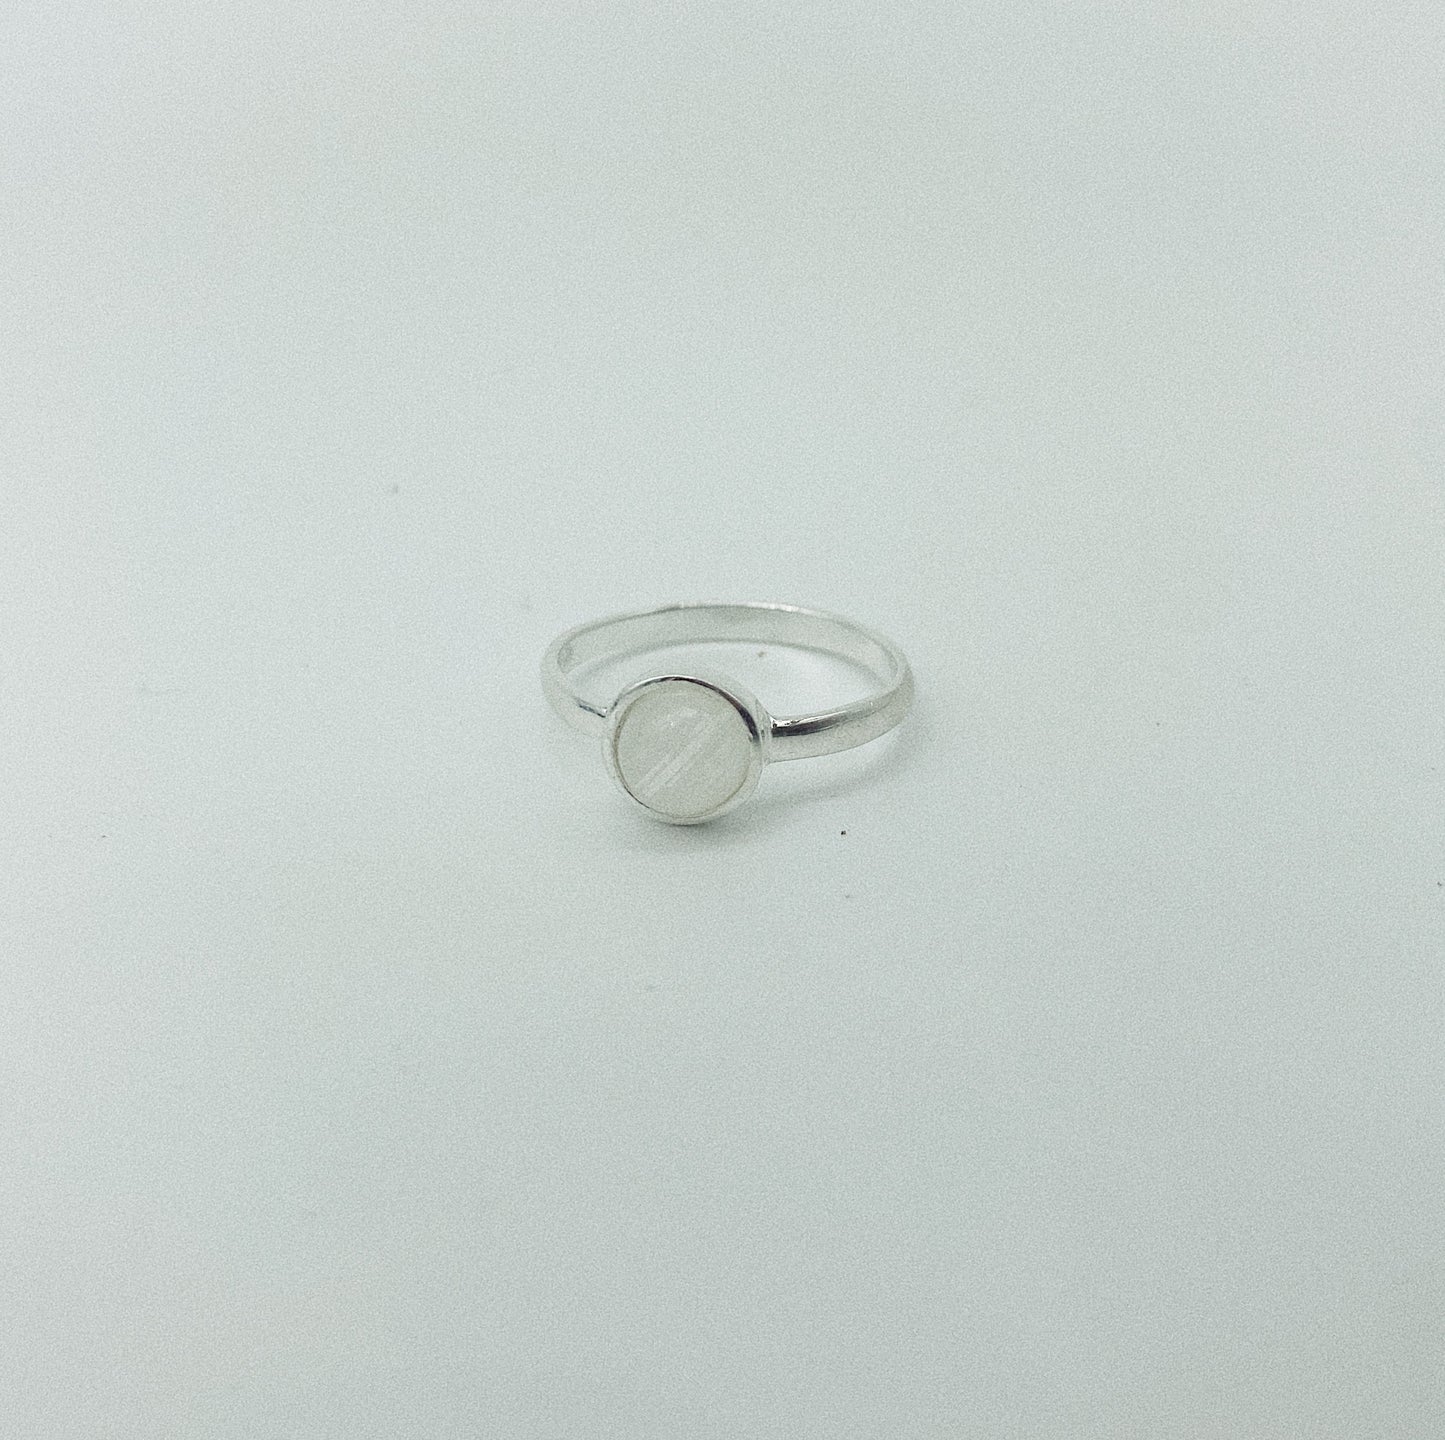 Simply Ring